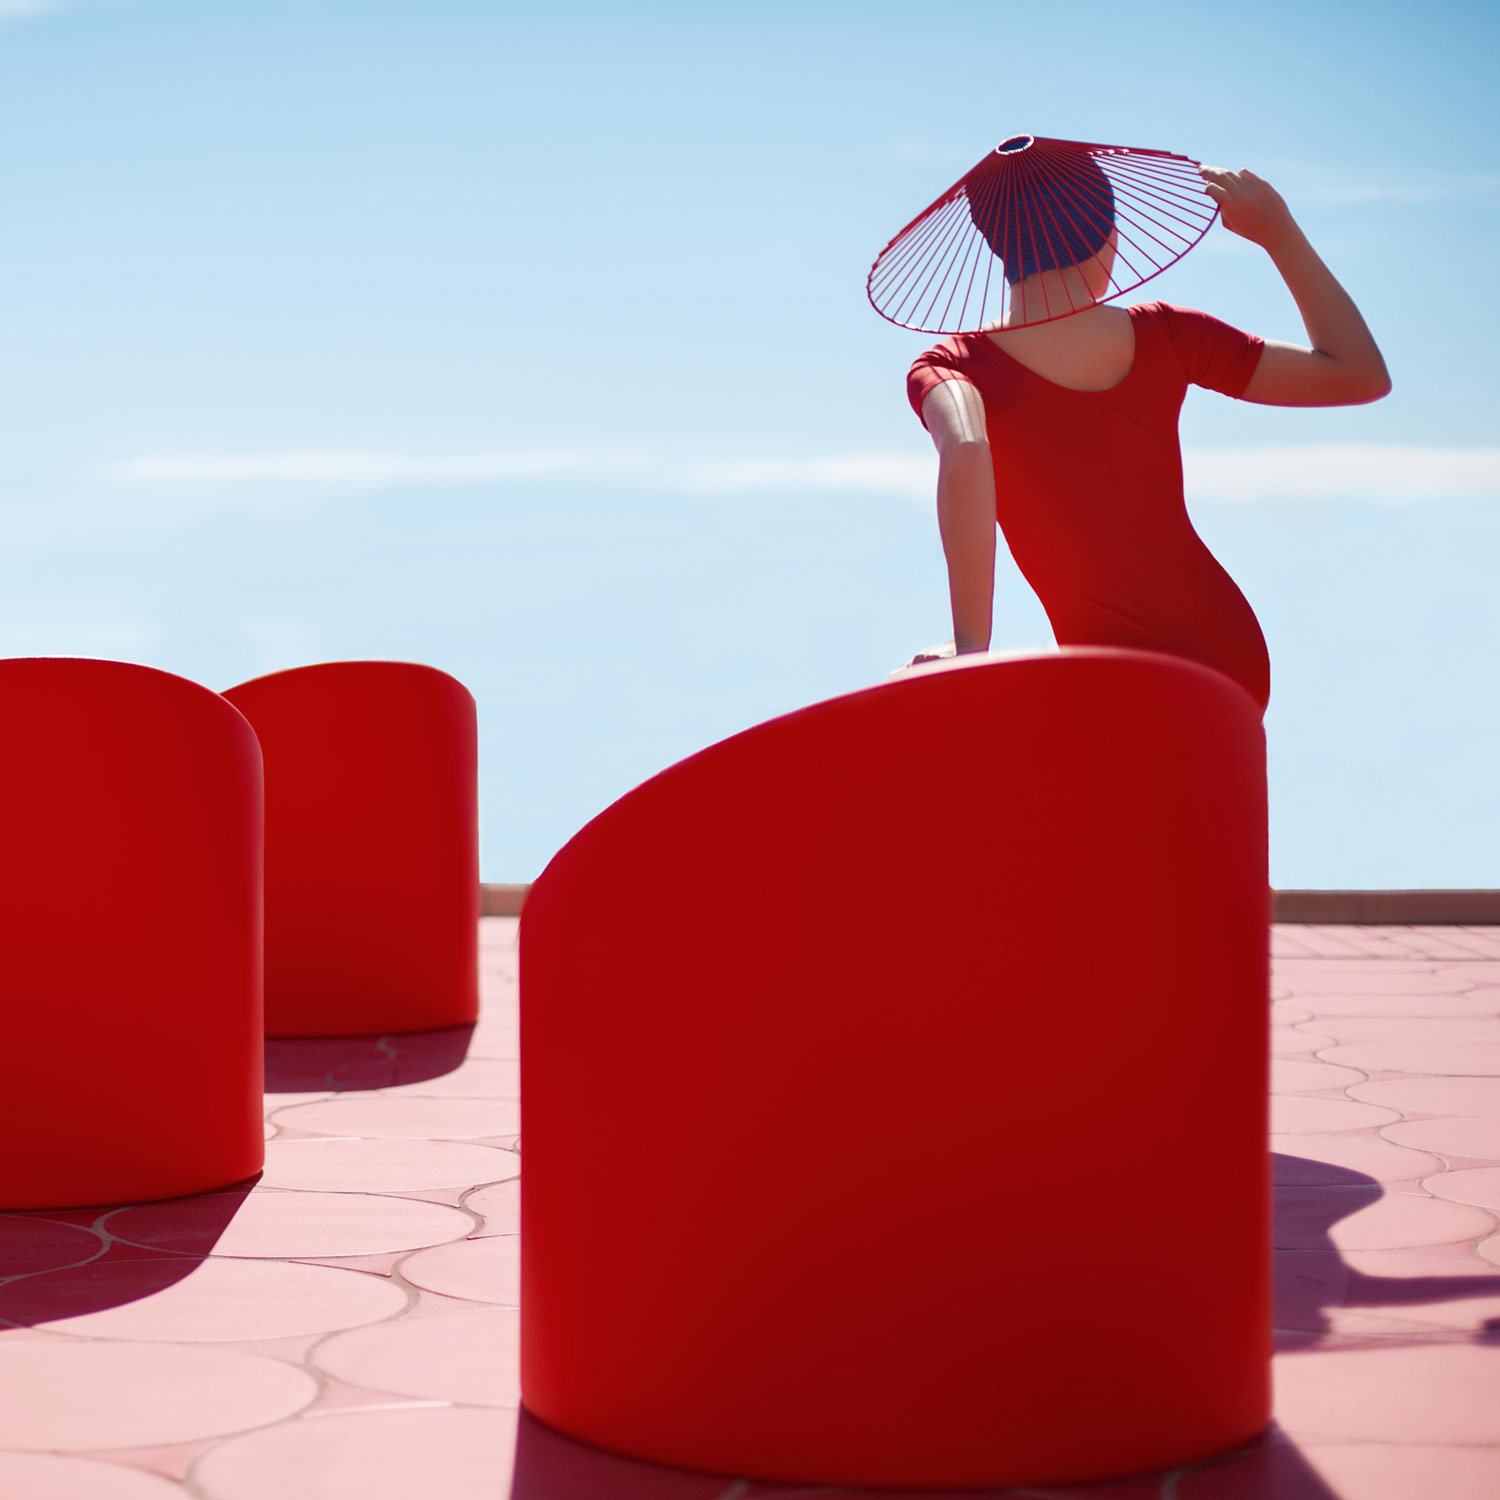 Altanmøbler støbt i plast i den flotte røde farve fra serien Lipstick fra Gitz Design